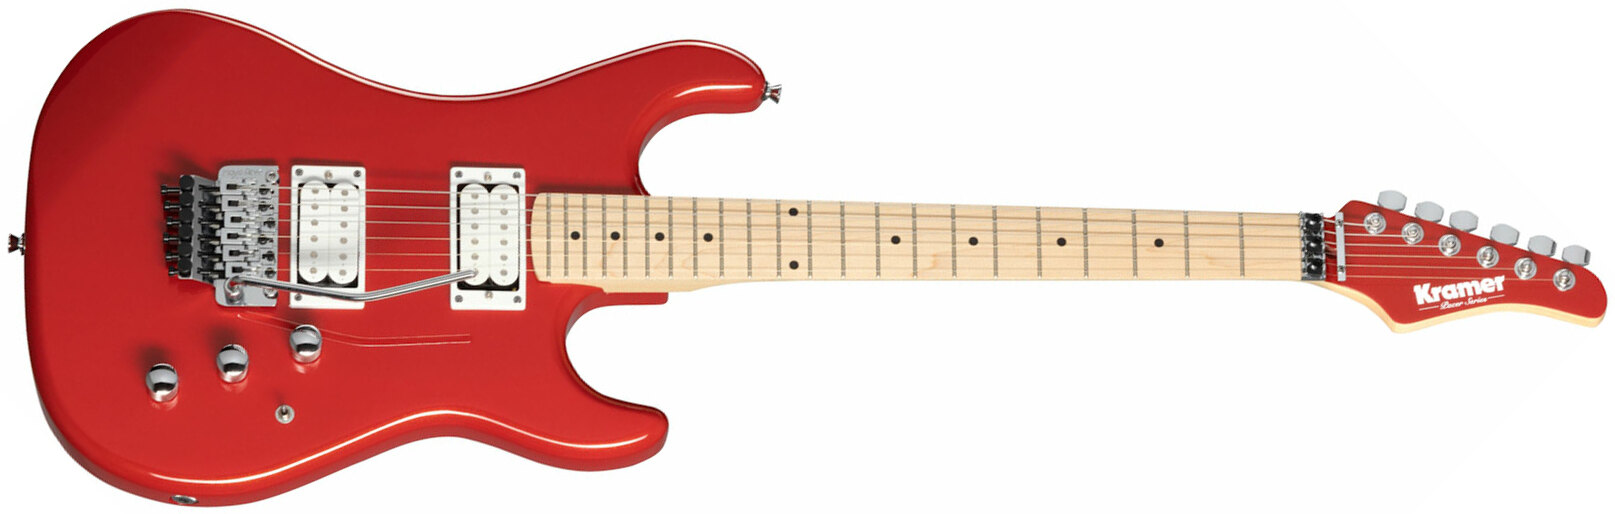 Kramer Pacer Classic 2h Fr Mn - Scarlet Red Metallic - Guitarra eléctrica con forma de str. - Main picture